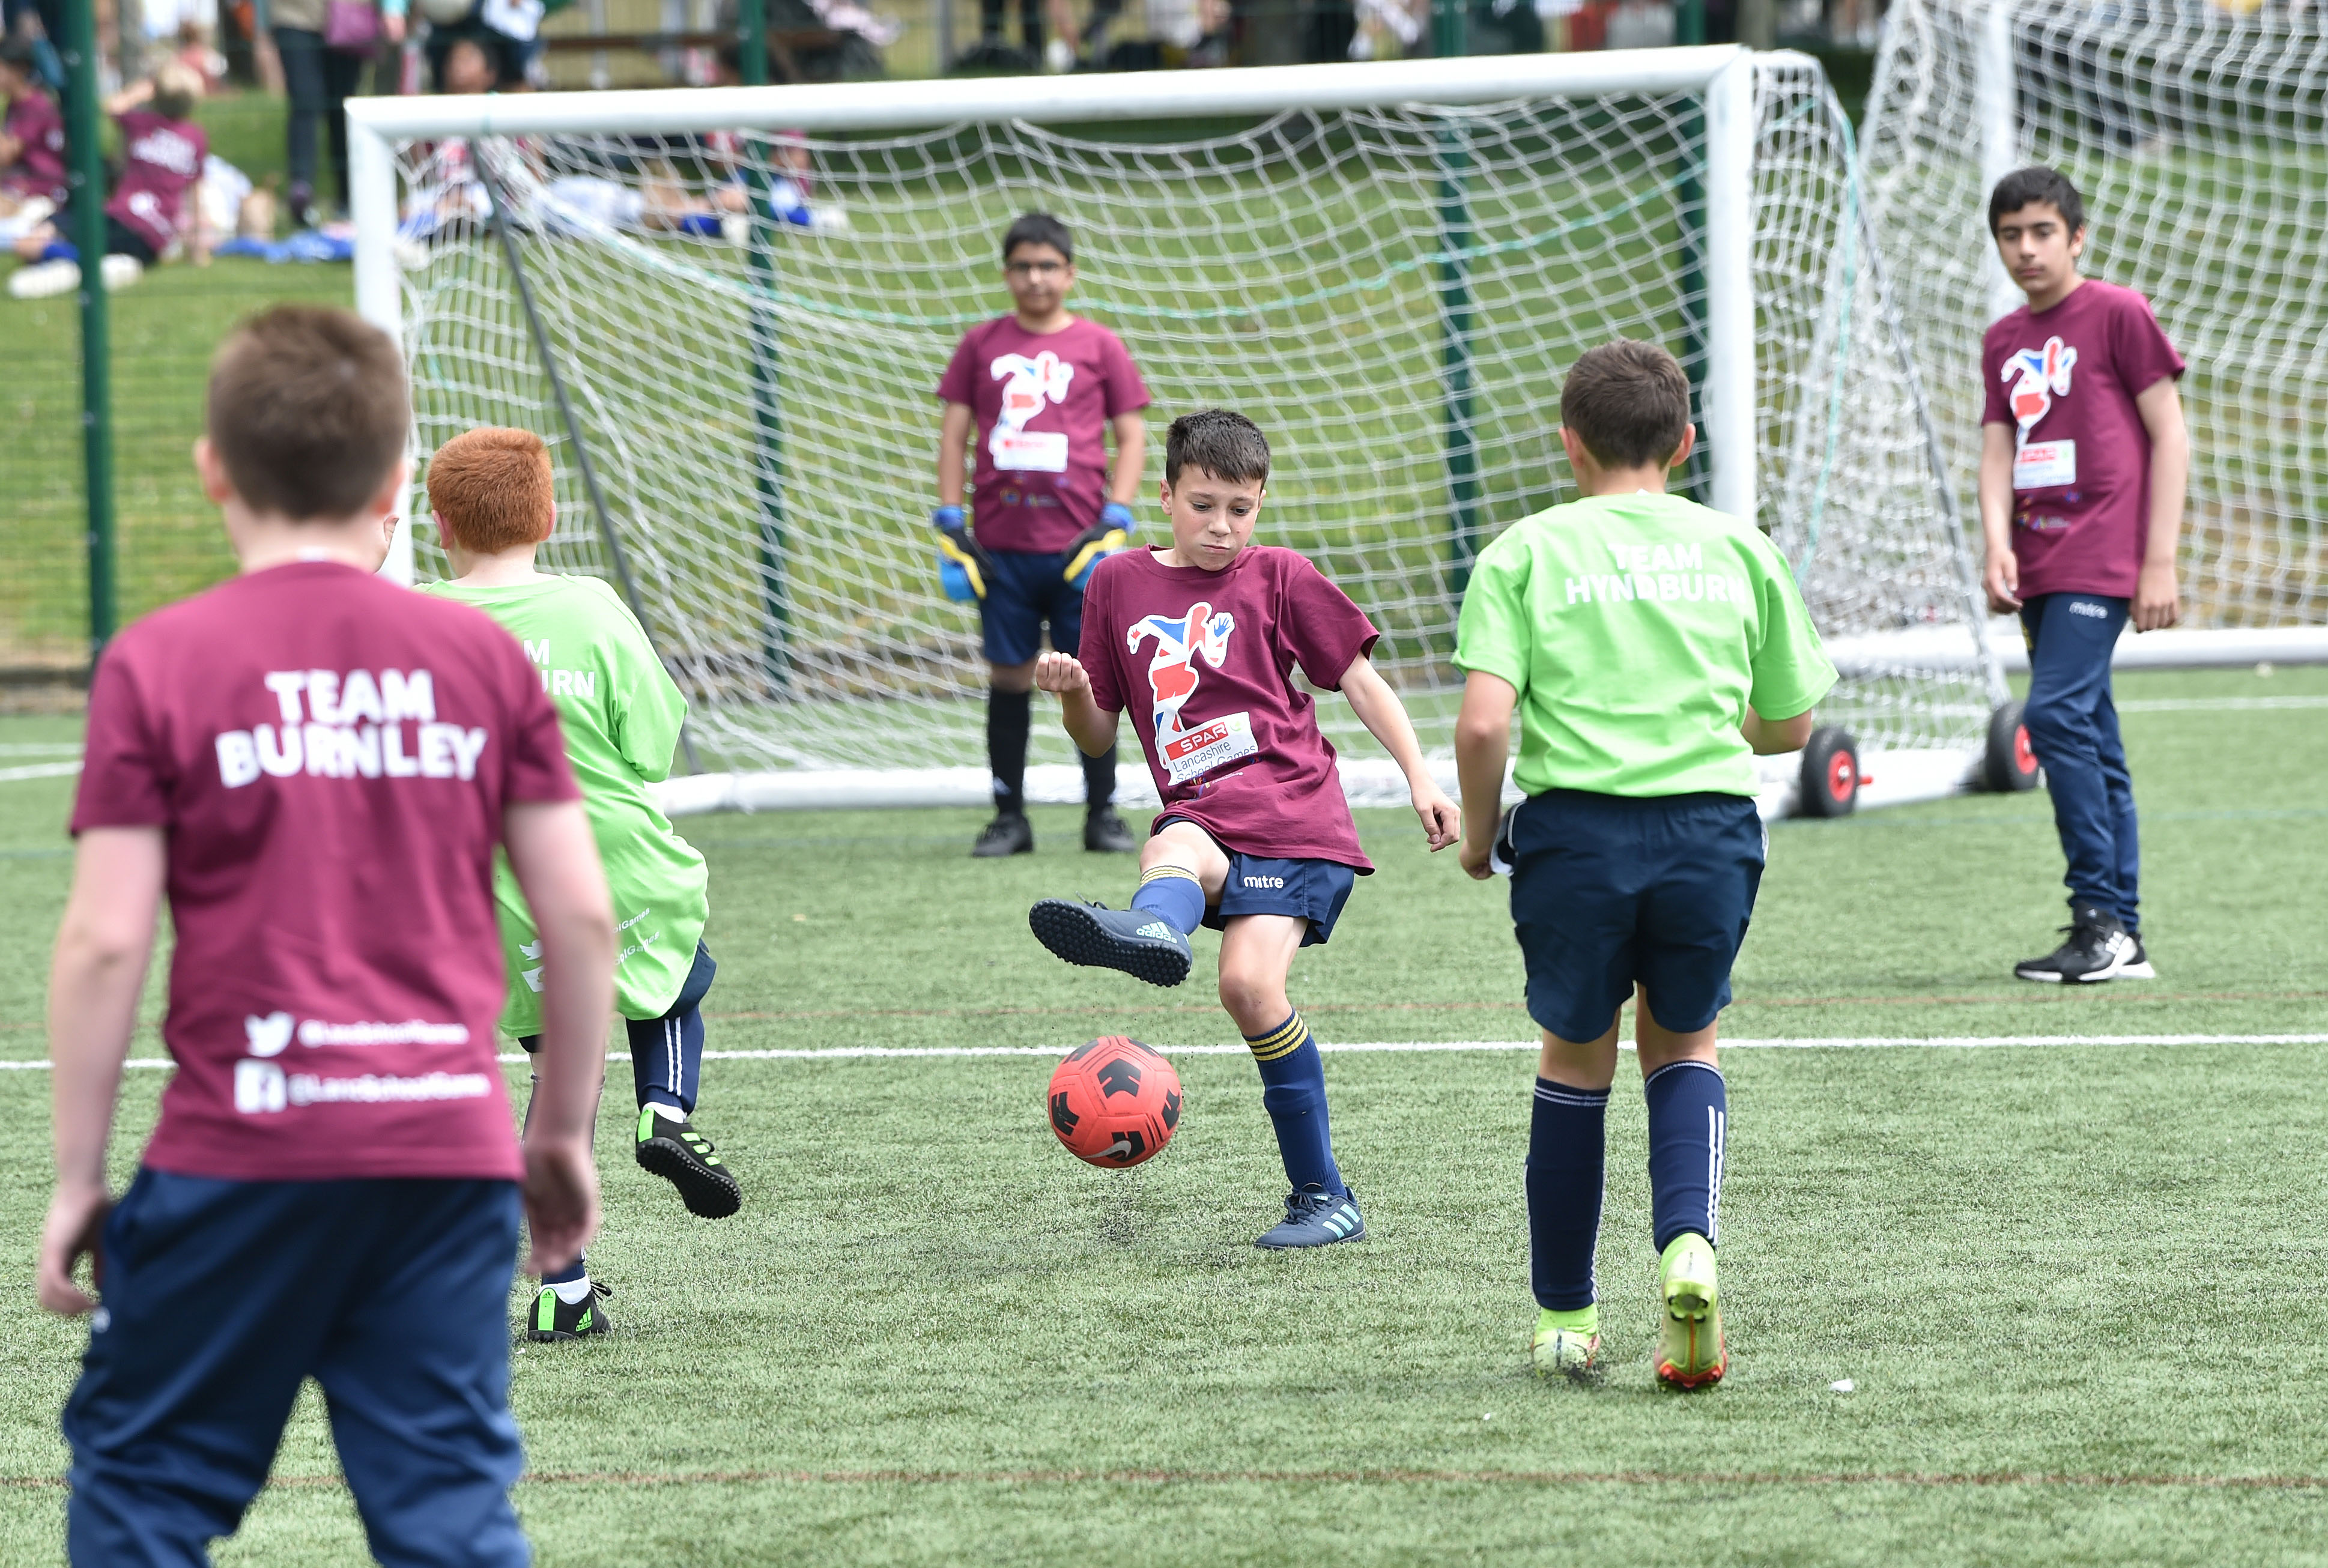 Lancashire School Games - Burnley football